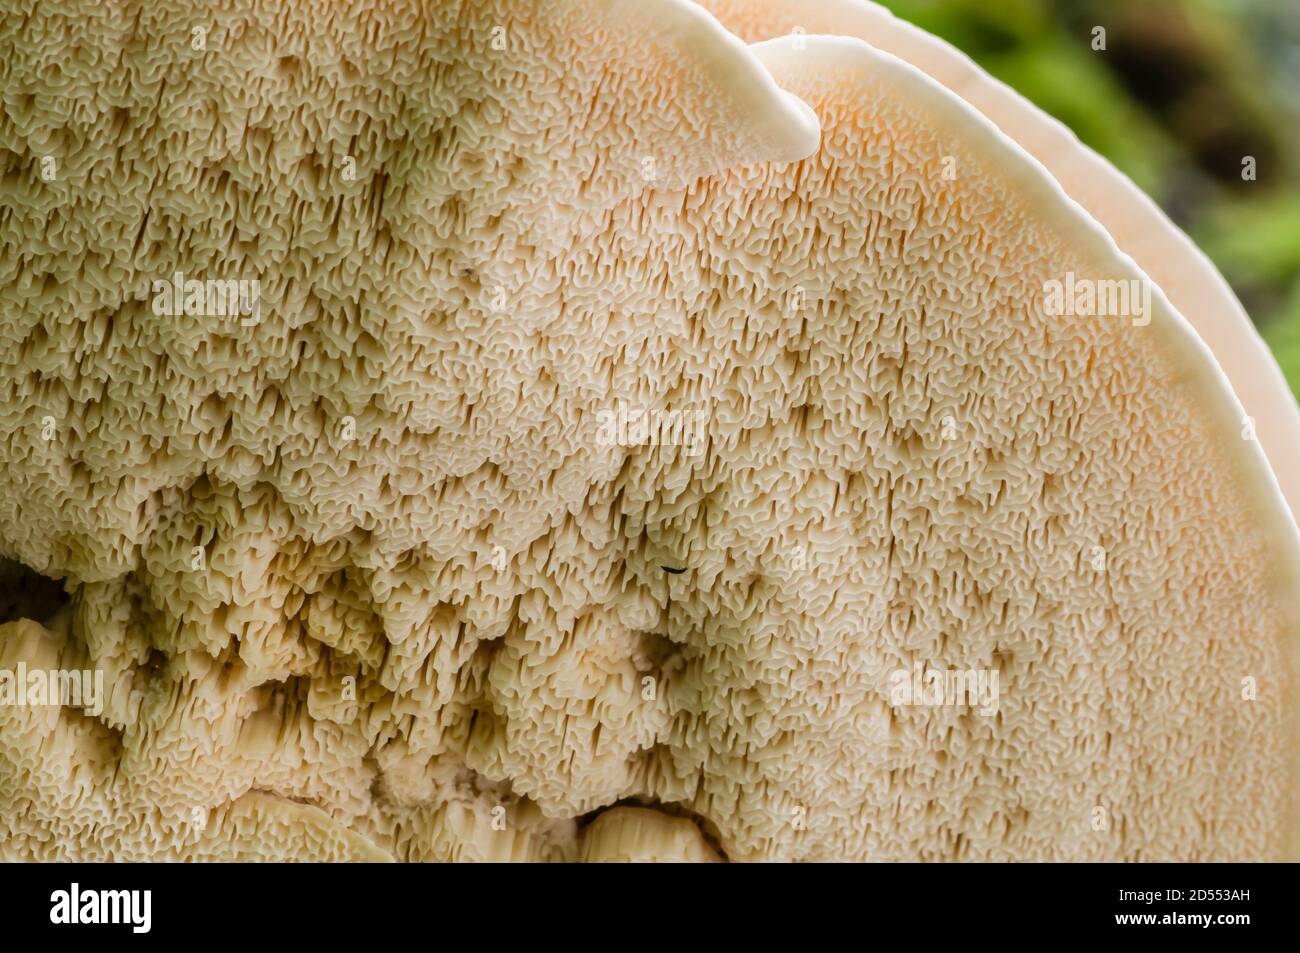 Underside of roof mushroom with sponge-like tissue Stock Photo